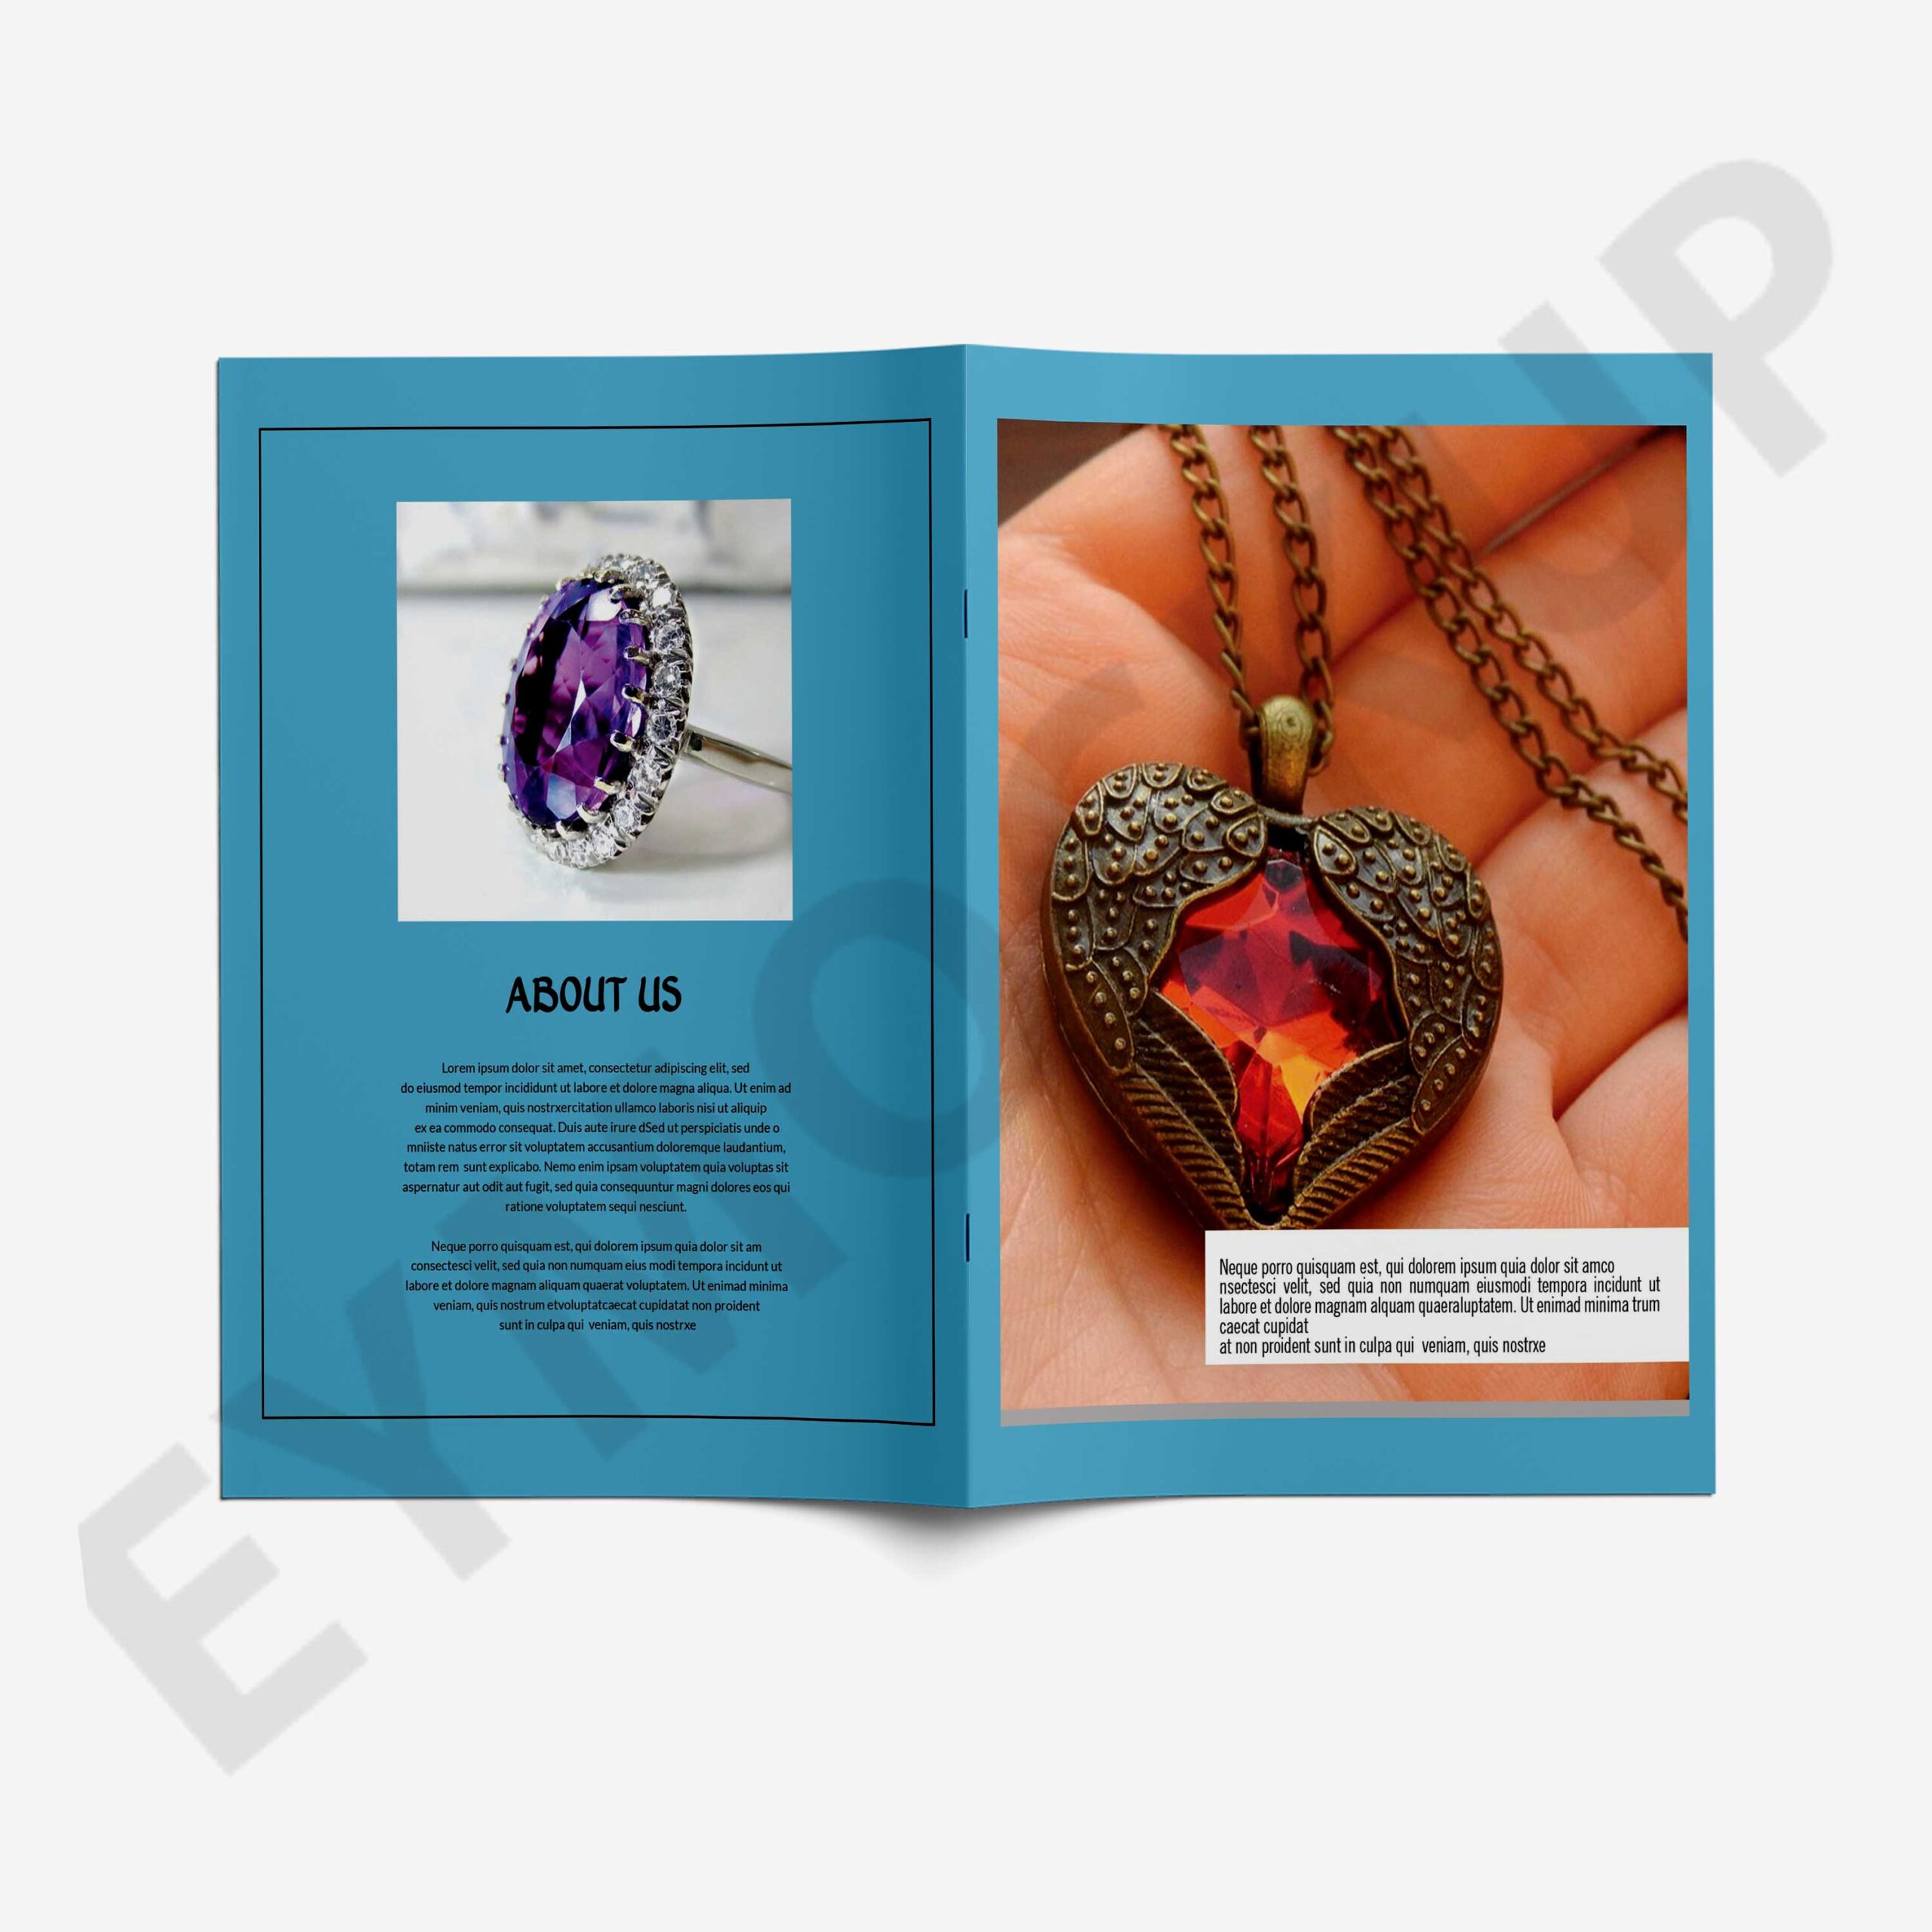 Jewellery Catalog Brochure